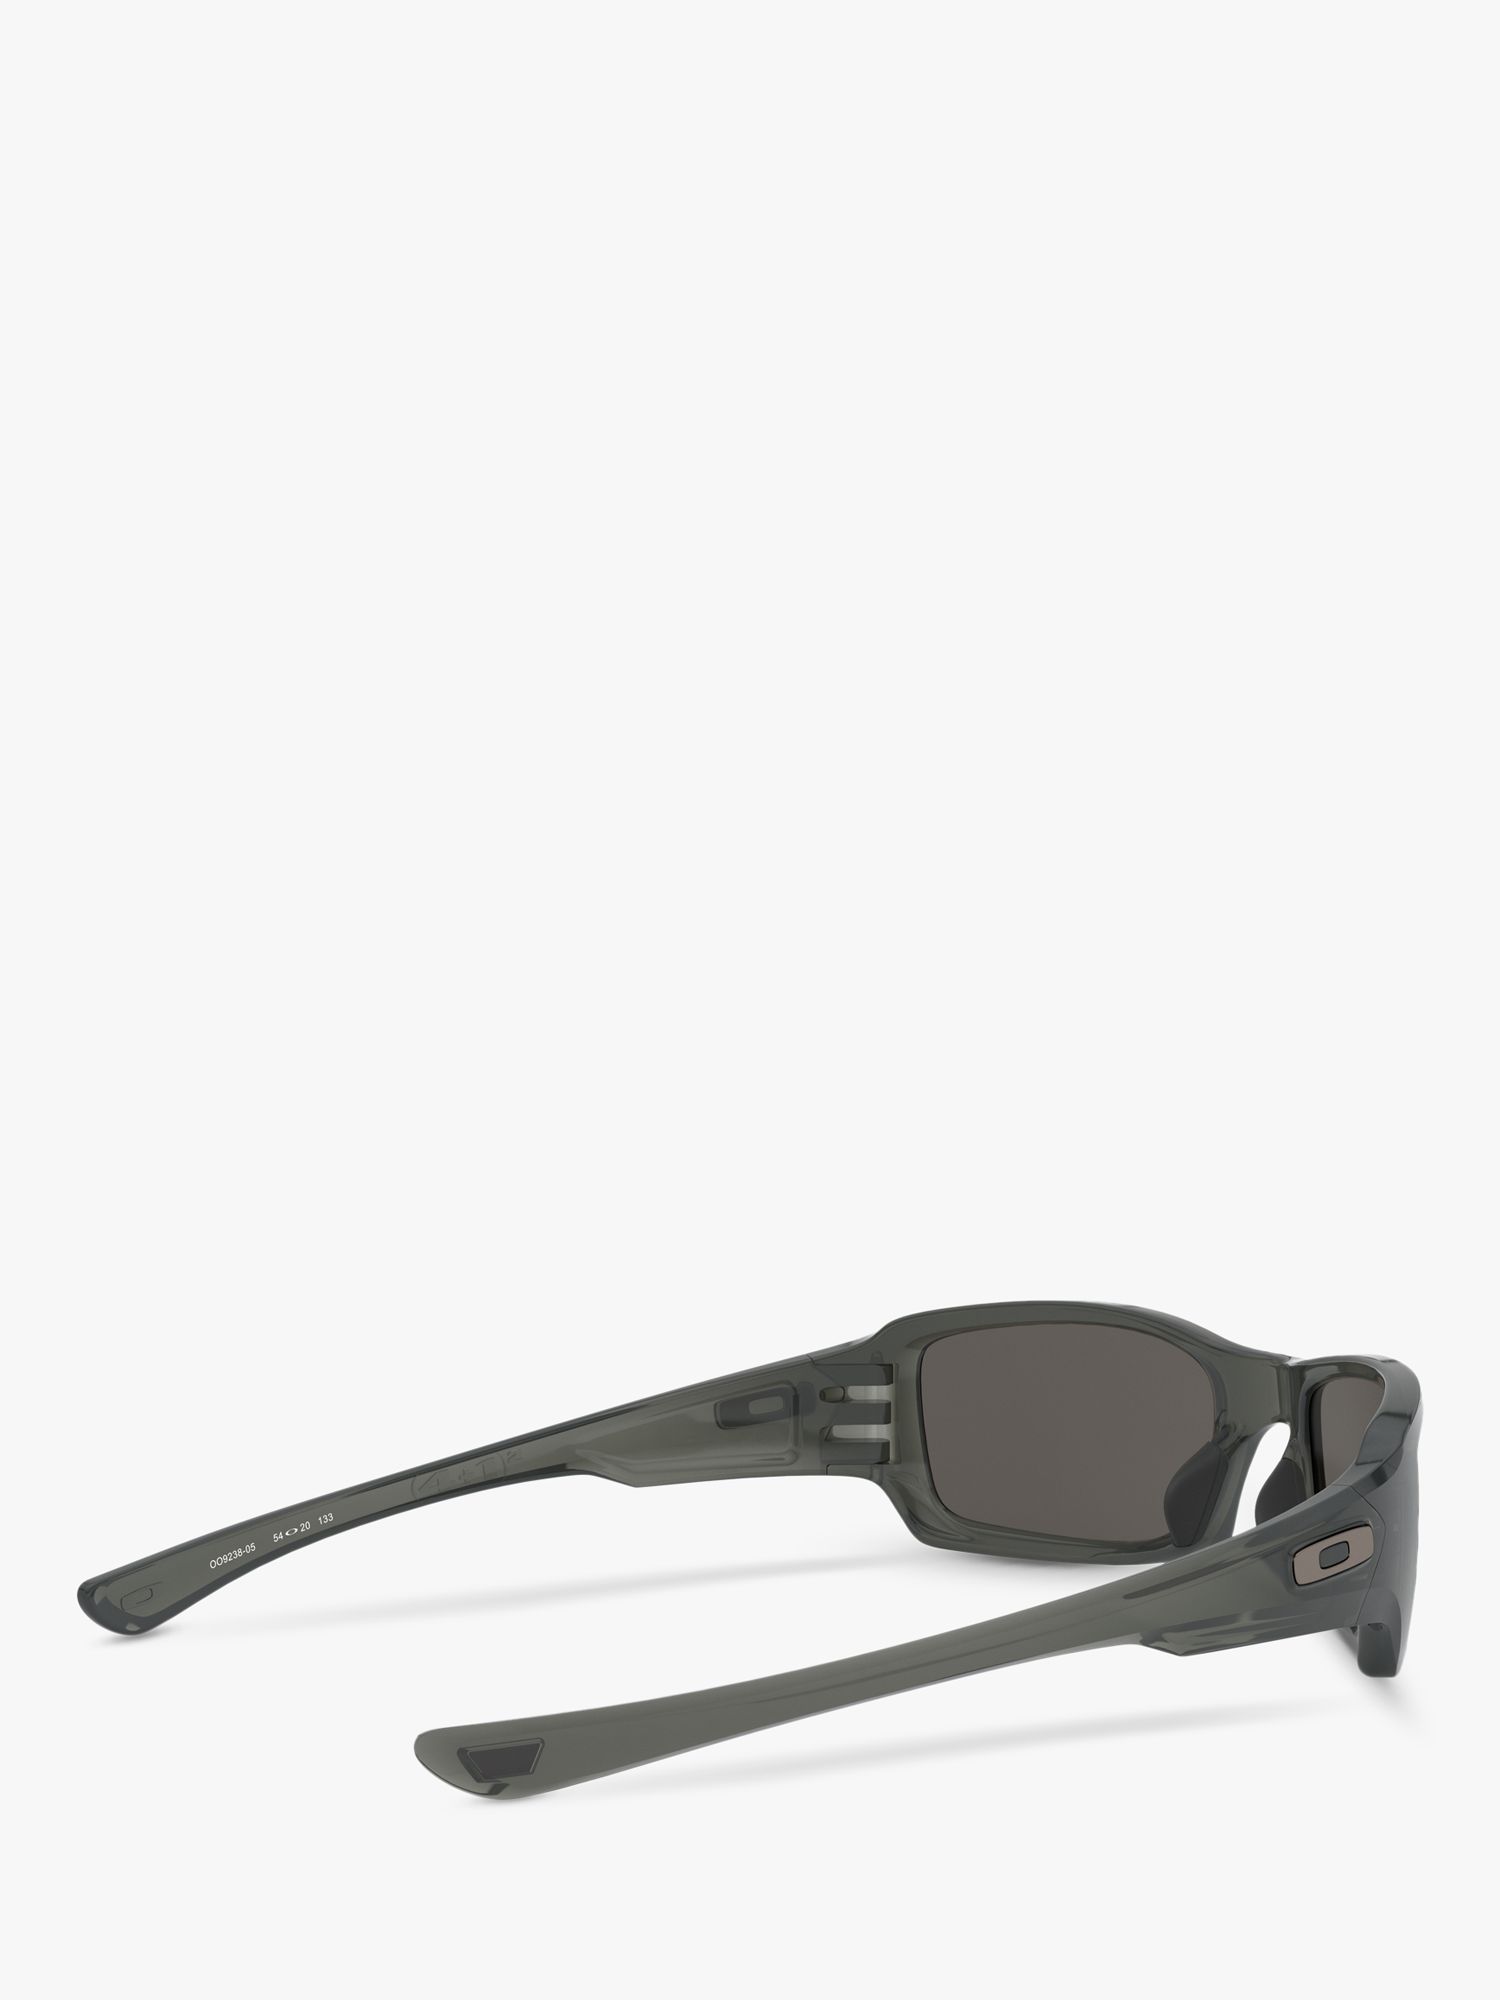 Oakley OO9238 Women's Fives Squared Rectangular Sunglasses, Grey Smoke